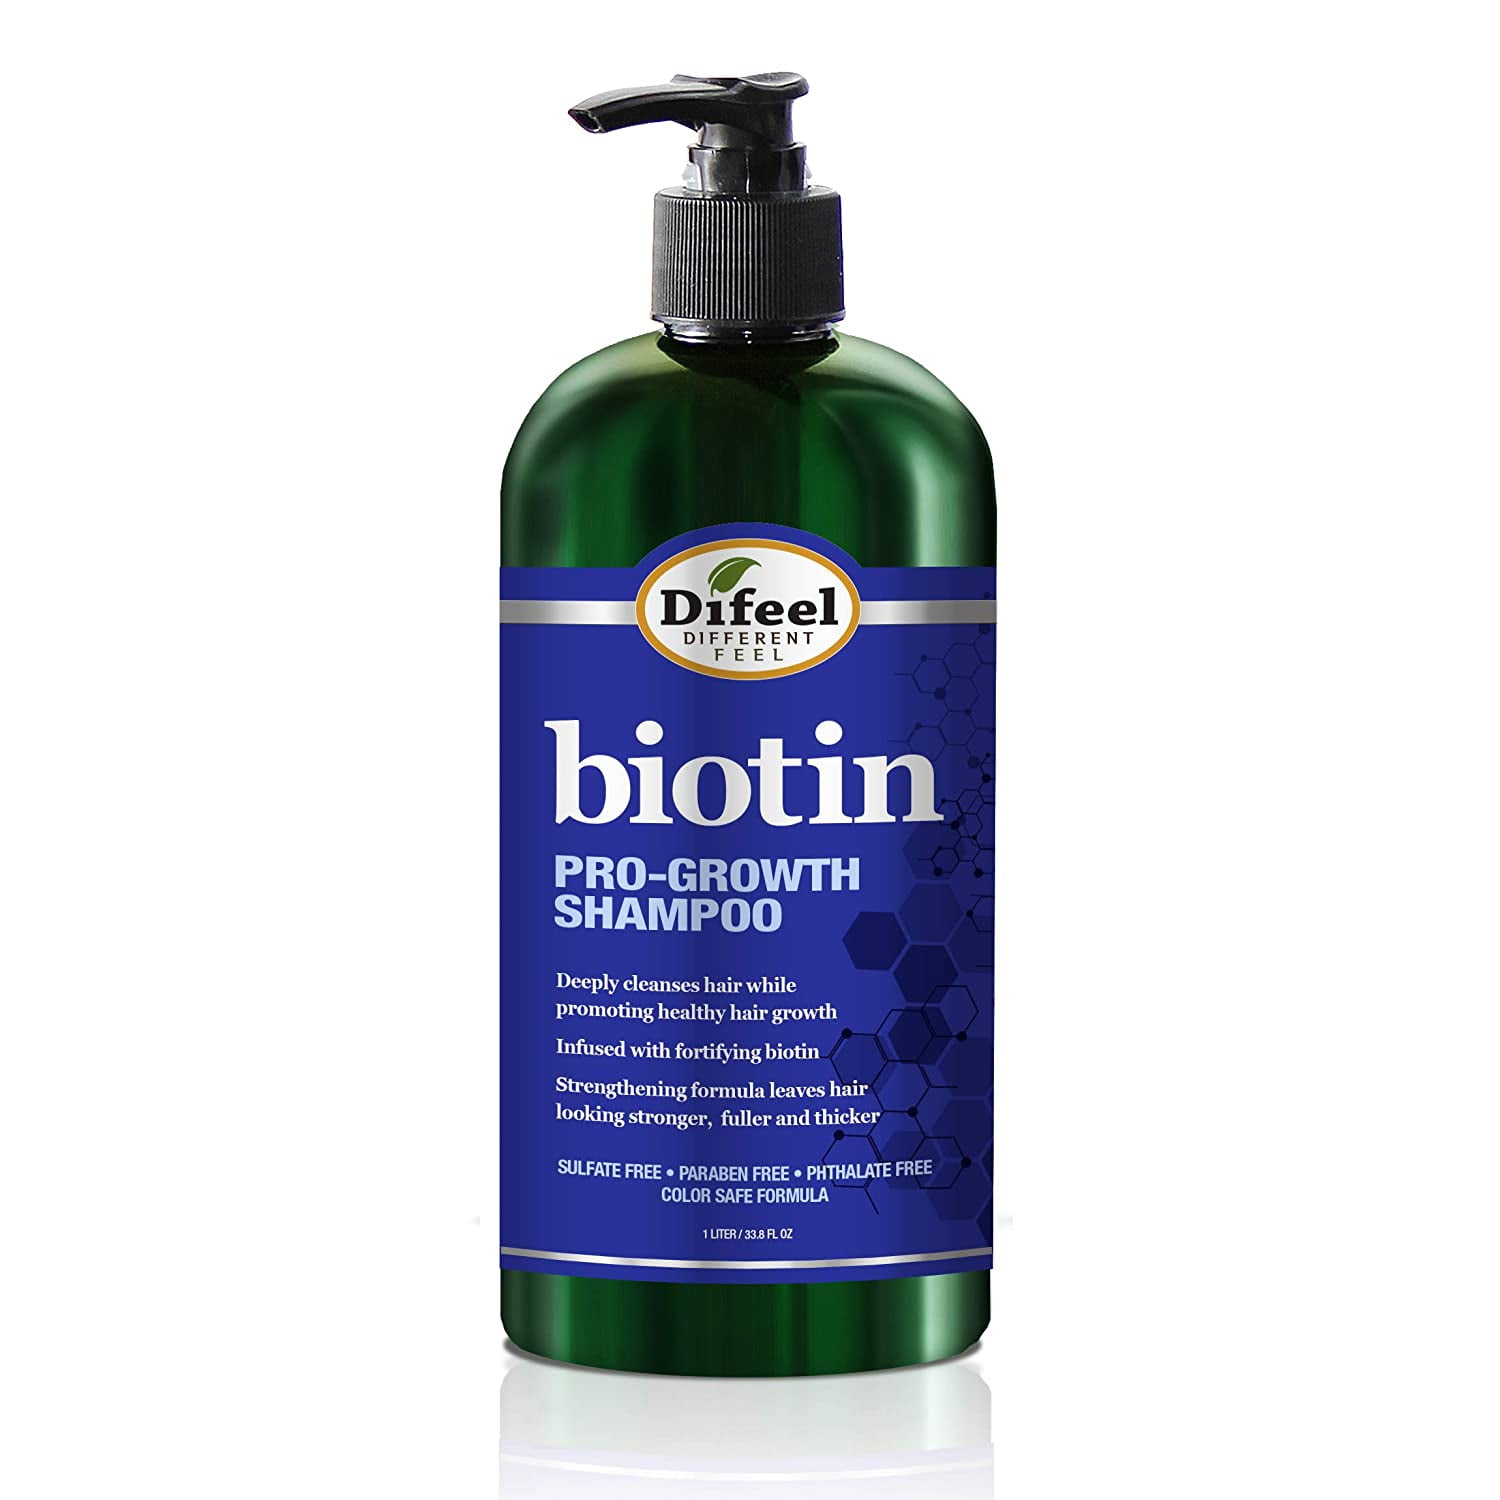 difeel-pro-growth-biotin-shampoo-33-8-oz-shampoo-for-thinning-hair